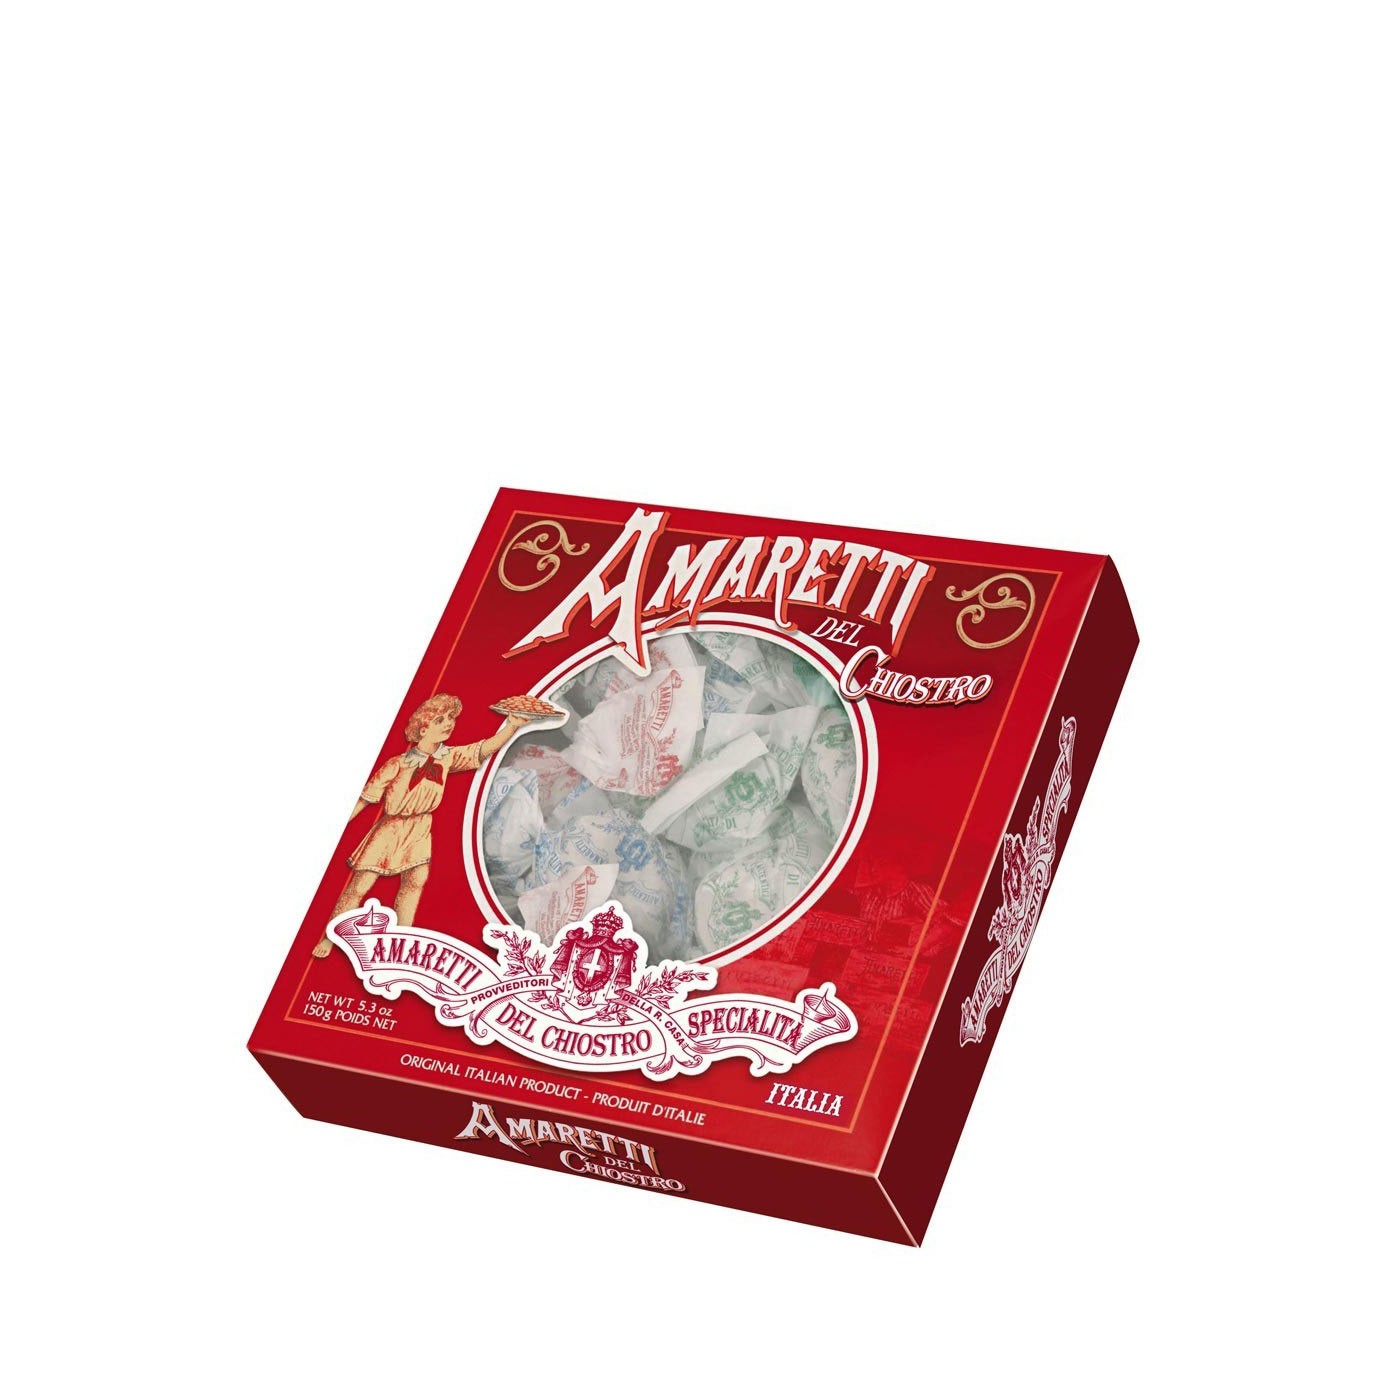 Crunchy Amaretti Cookies in Box 5.2 oz